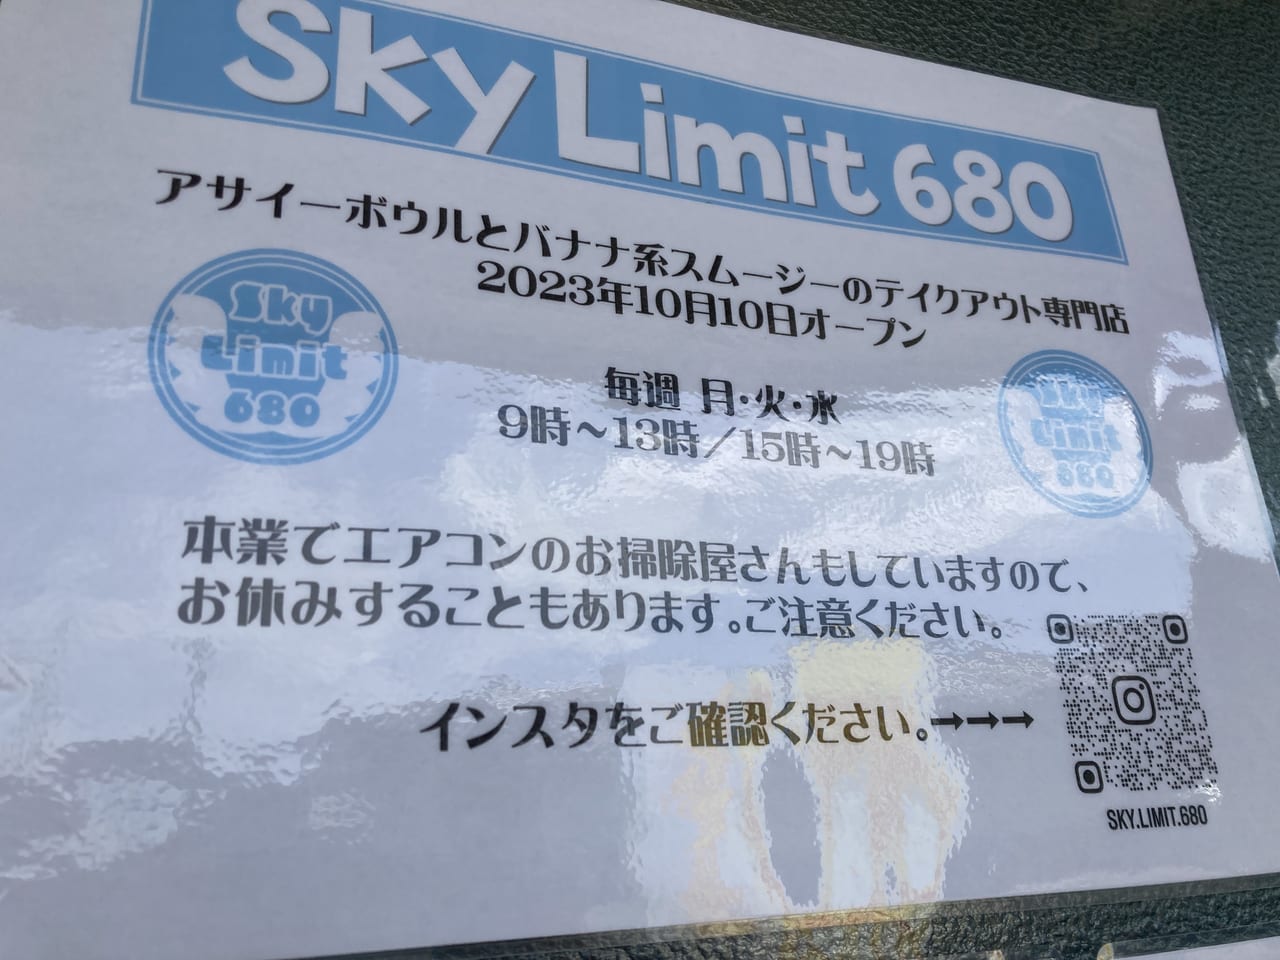 Sky Limit 6804